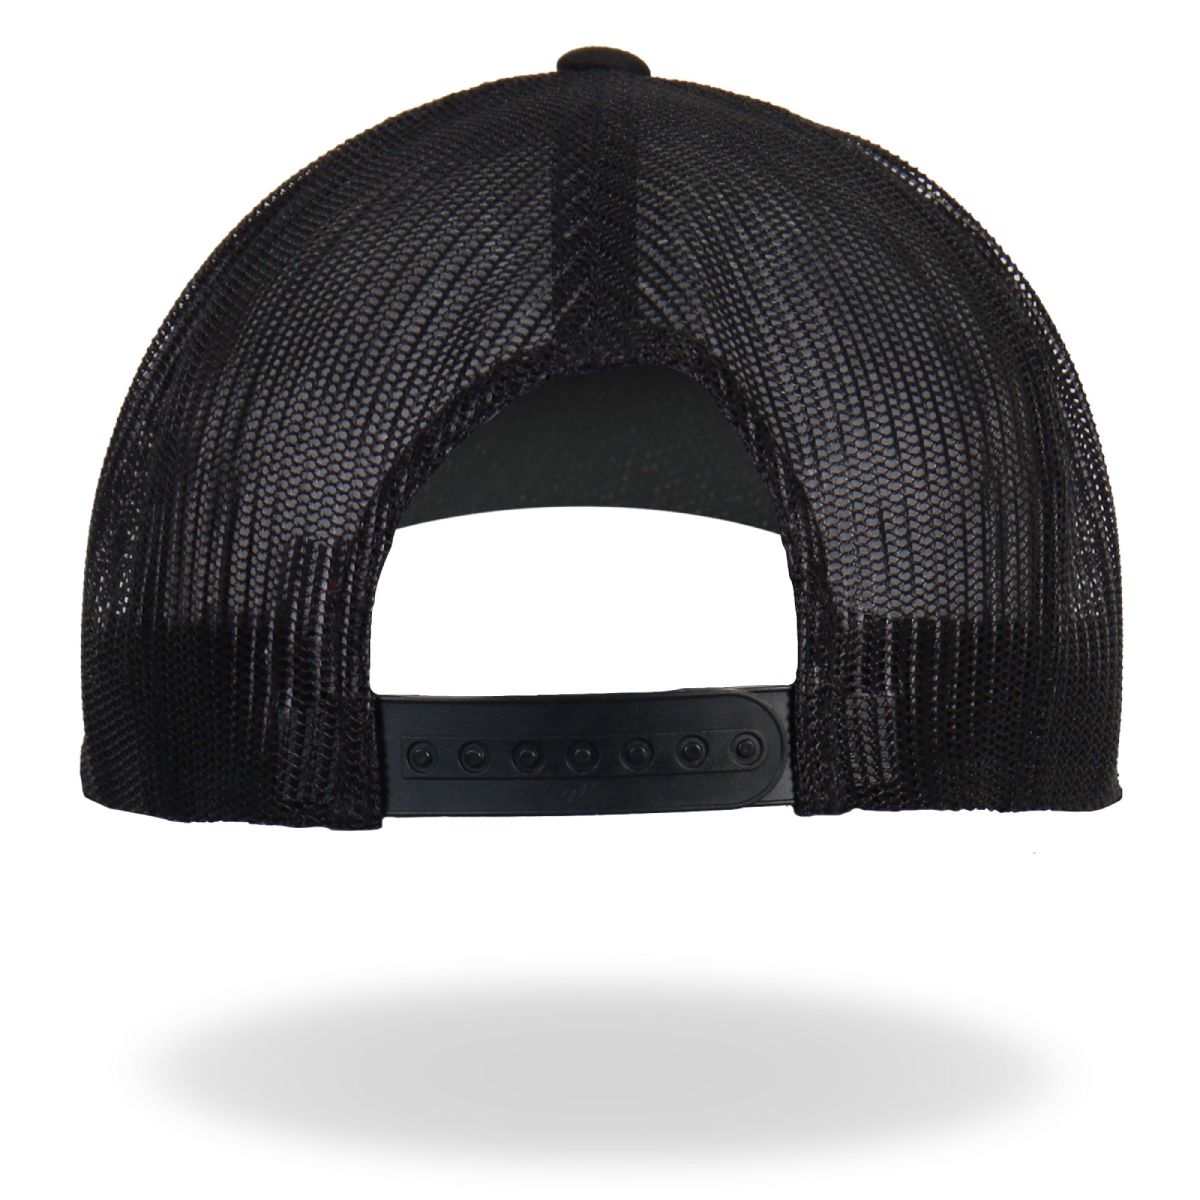 Hot Leathers GSH1039 Cupcake Snapback Hat